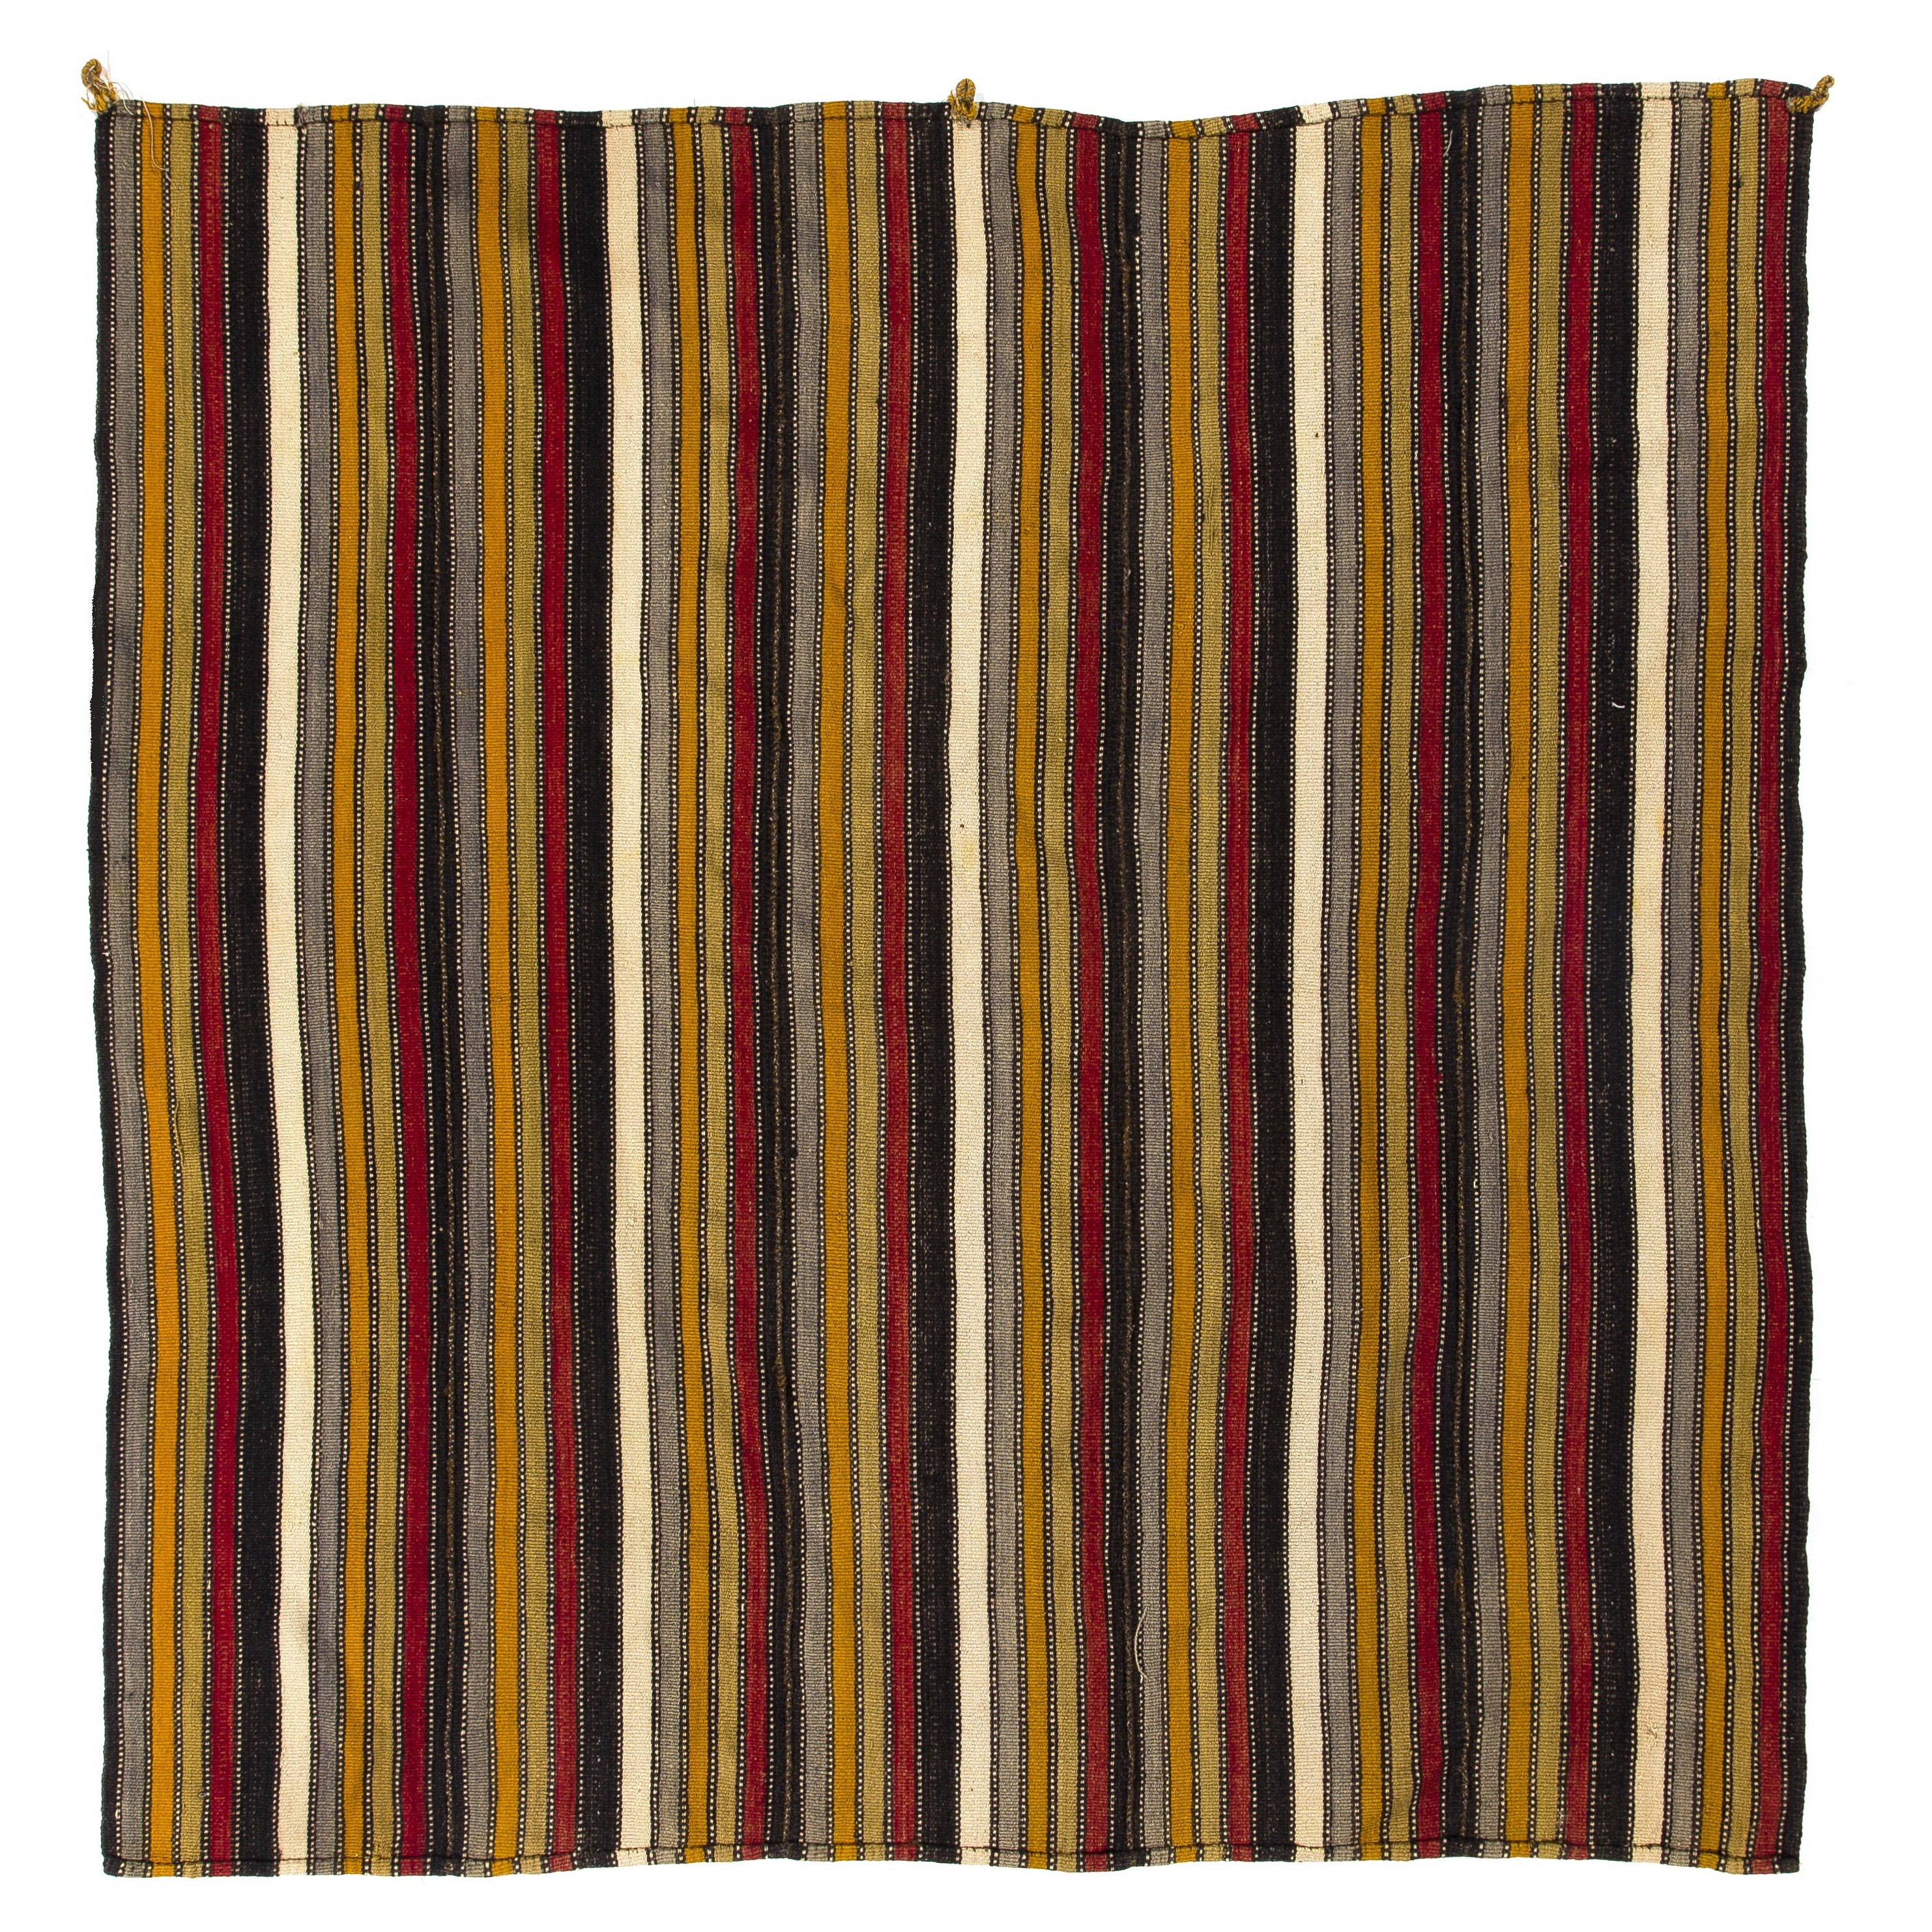 5.7x5.9 ft Handwoven Striped Vintage Kilim Rug, Flat-Weave Wool Floor Covering